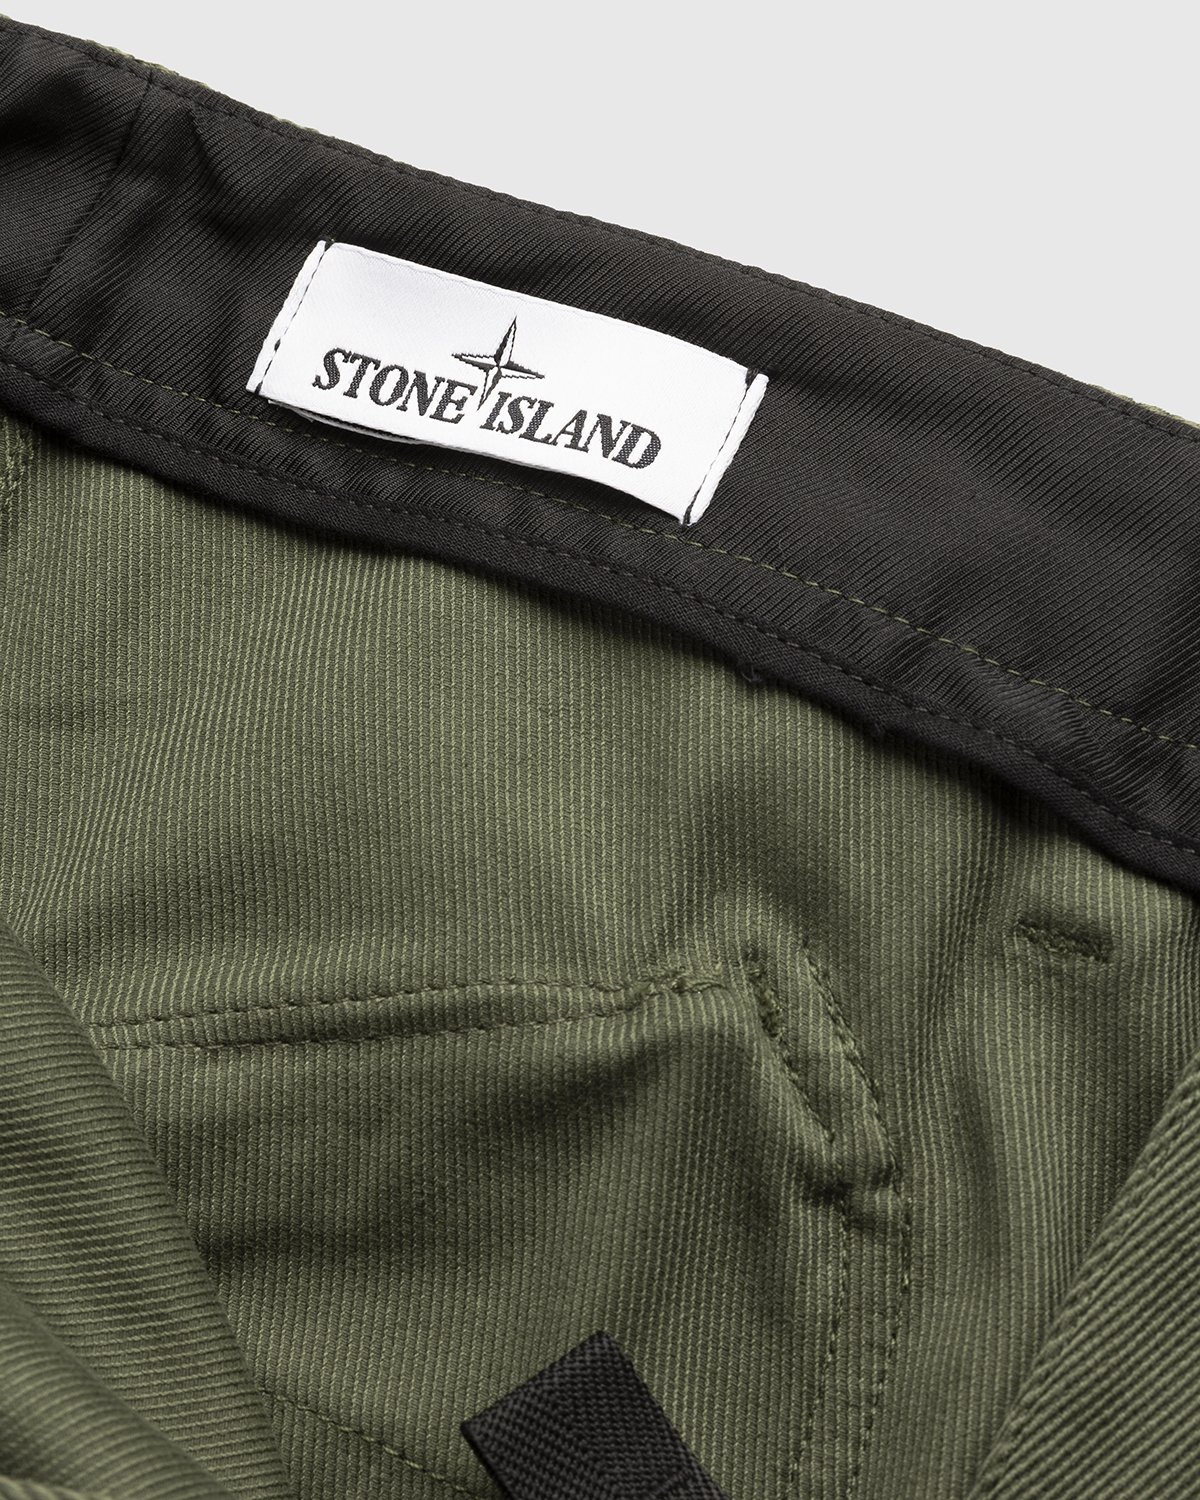 Stone Island - Pants Sage Green - Clothing - Green - Image 5